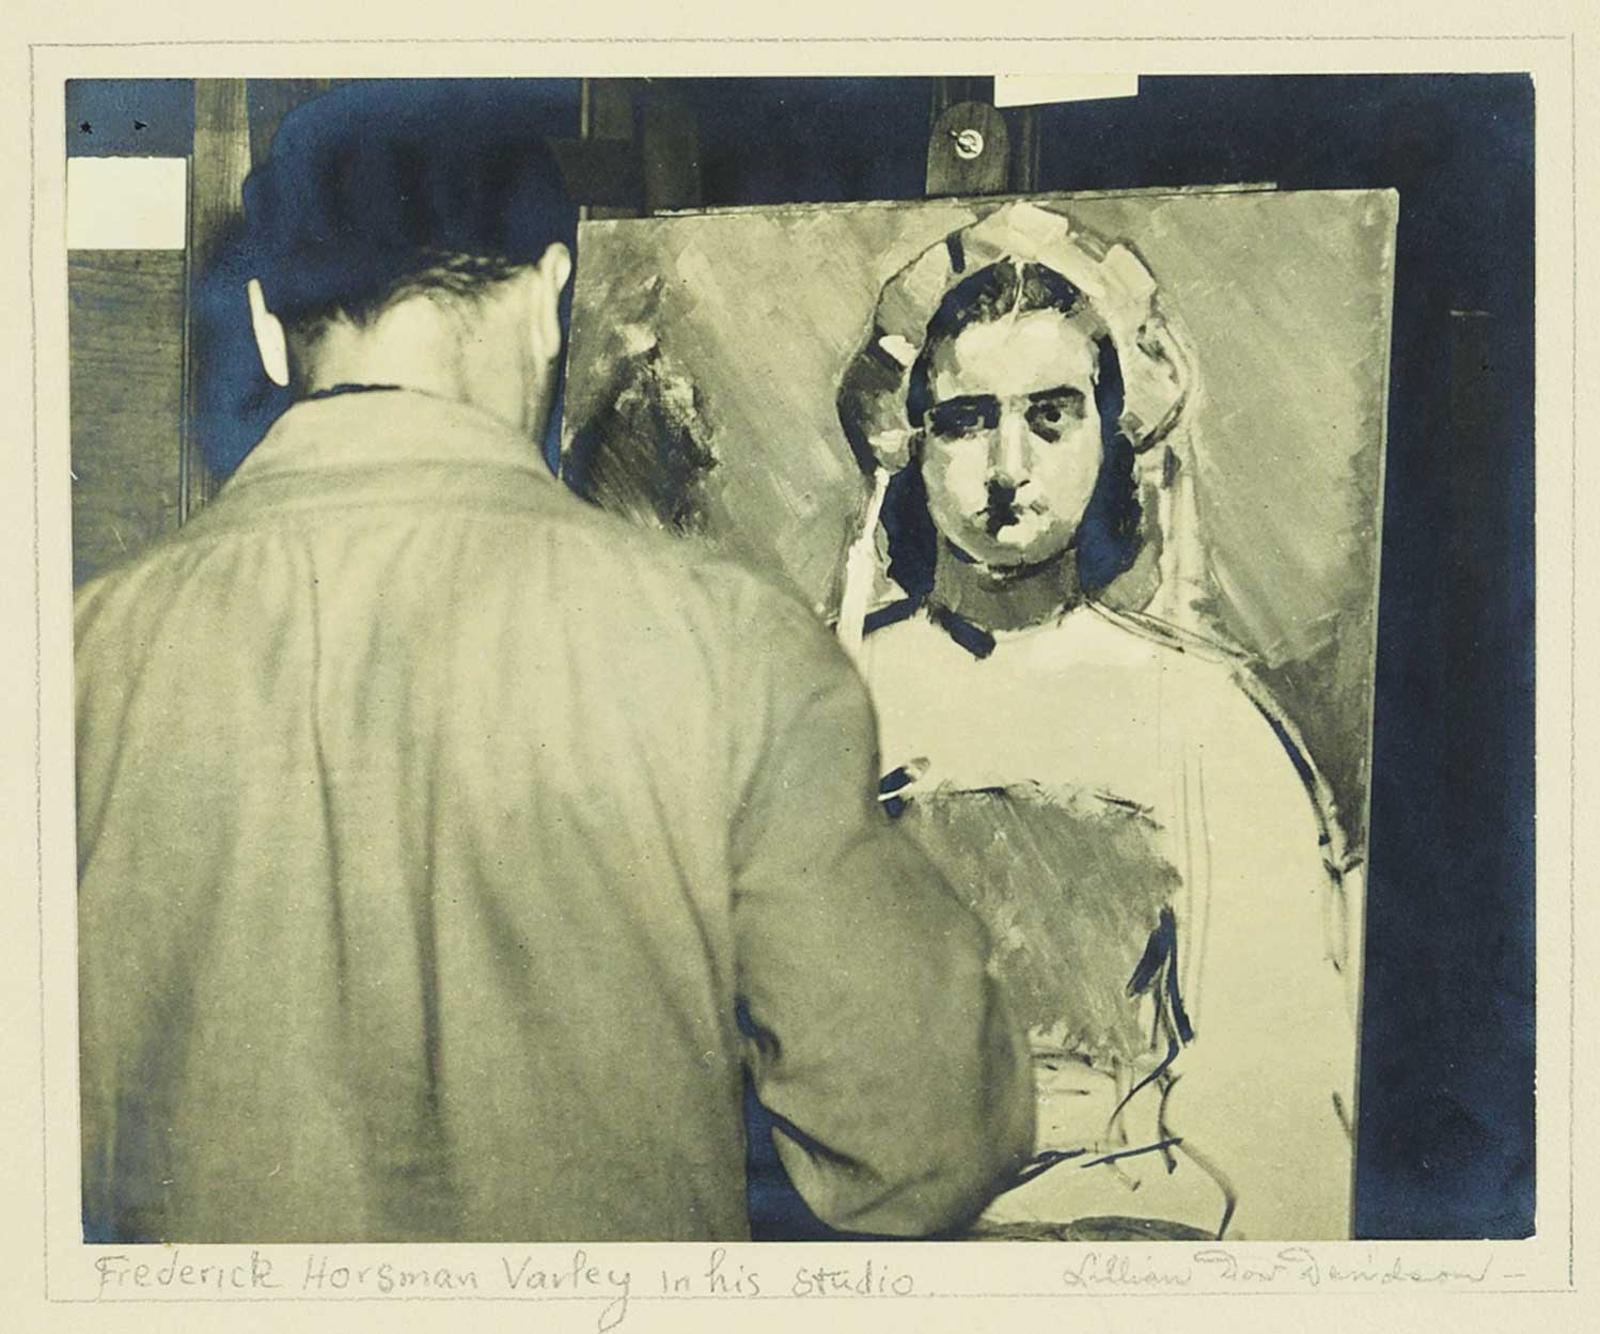 Lillian Dow Davidson - Frederick Horsman Varley in his Studio